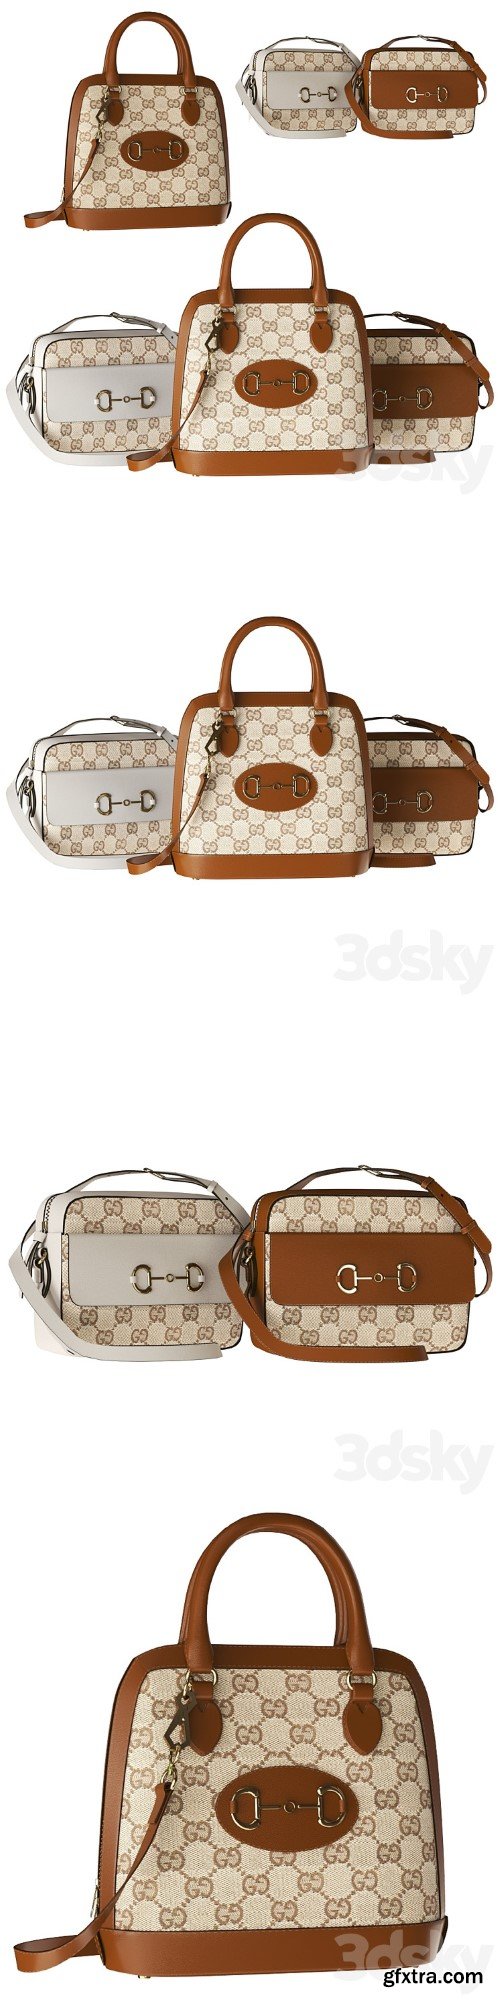 Gucci set bags 3